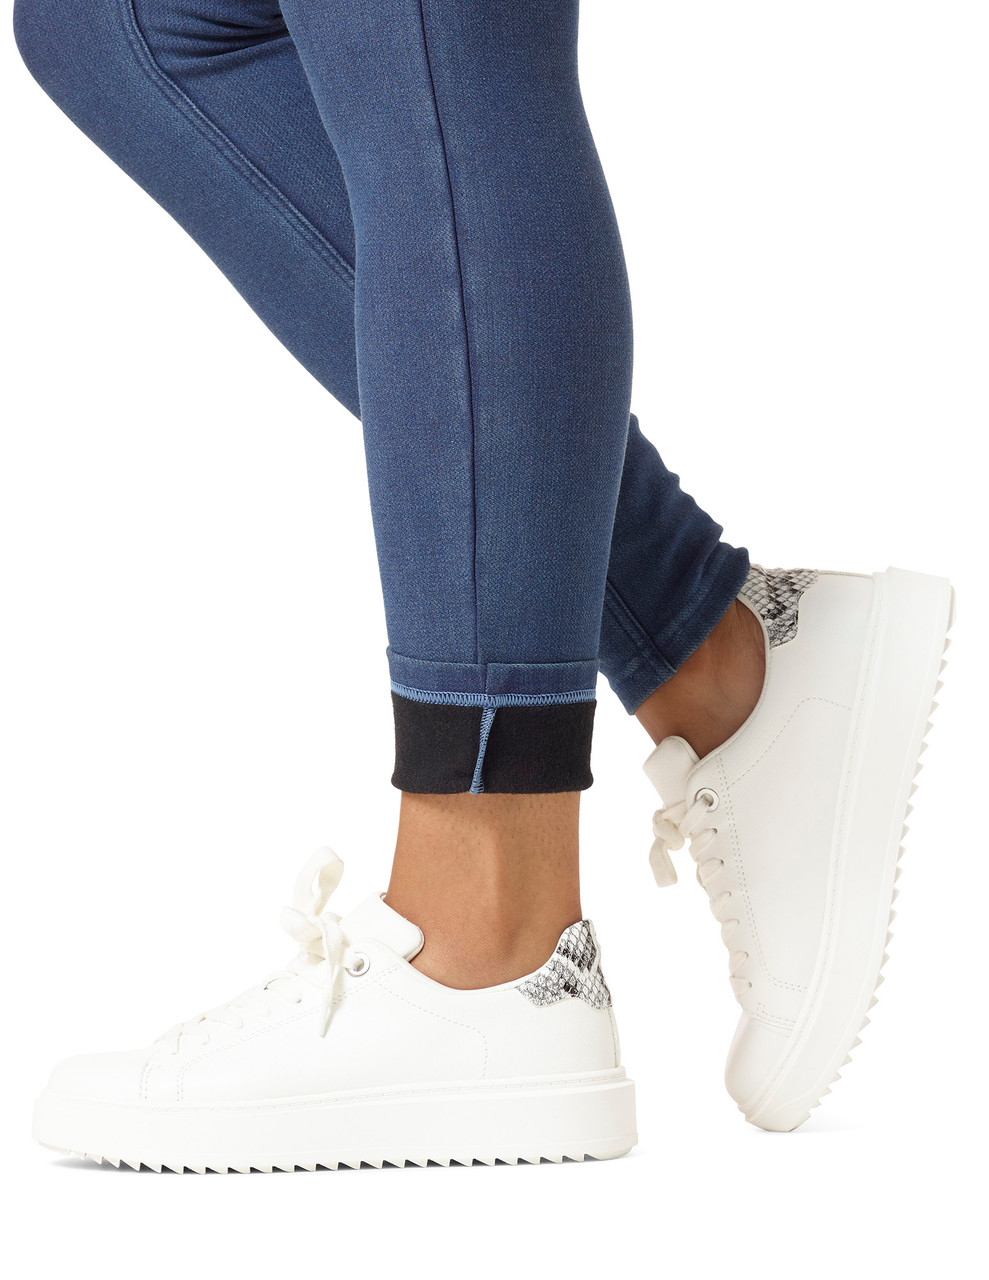 Buy HAU Thermal Fleece Denim Jeggings - Women's Denim Print Fake Jeans  Seamless Fleece Lined Leggings, Full Length (Blue, L) at